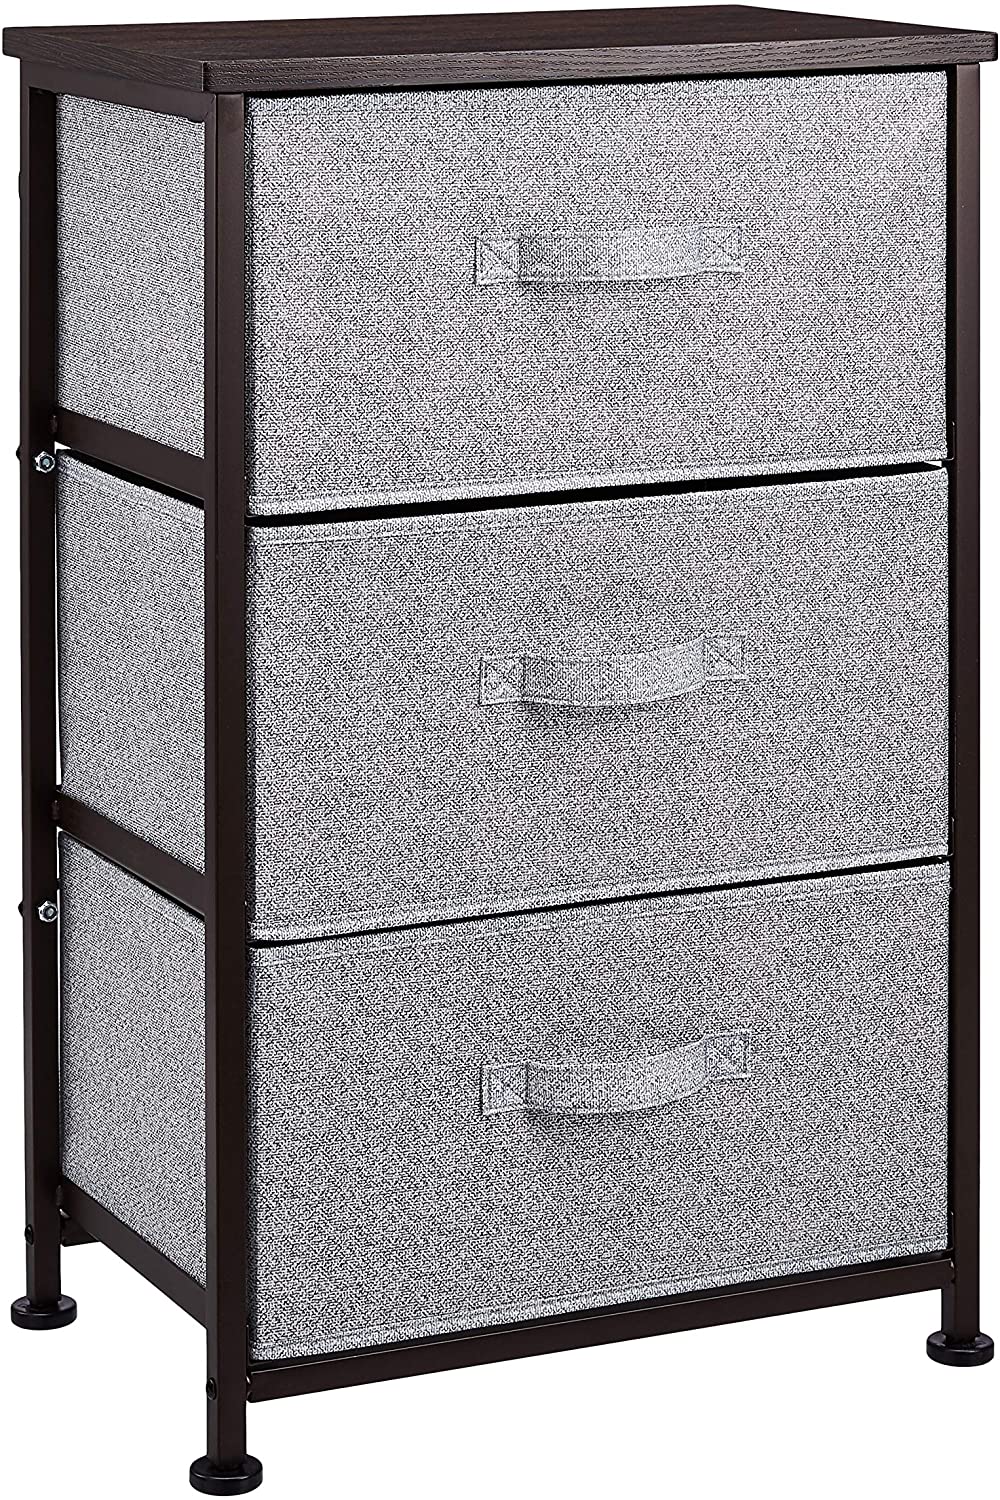 3 Drawer Storage Organizer Unit for Closet - USTAD HOME